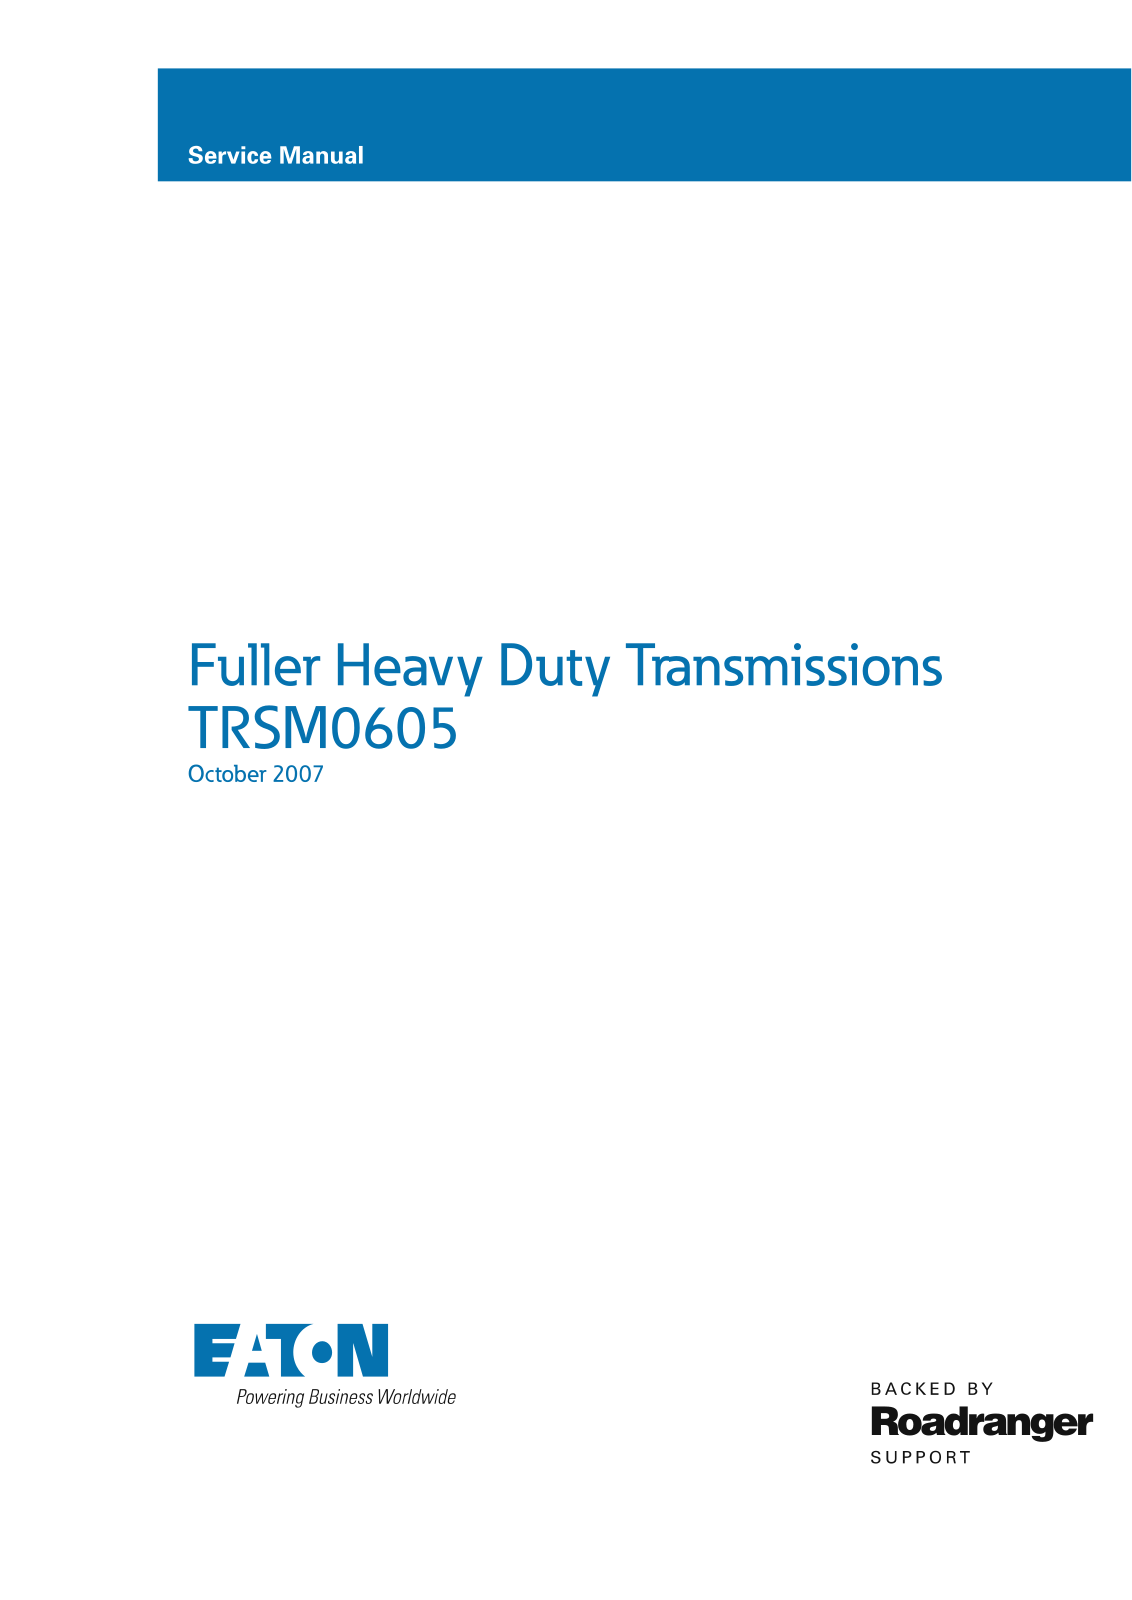 Eaton Transmission RT-613 Service Manual